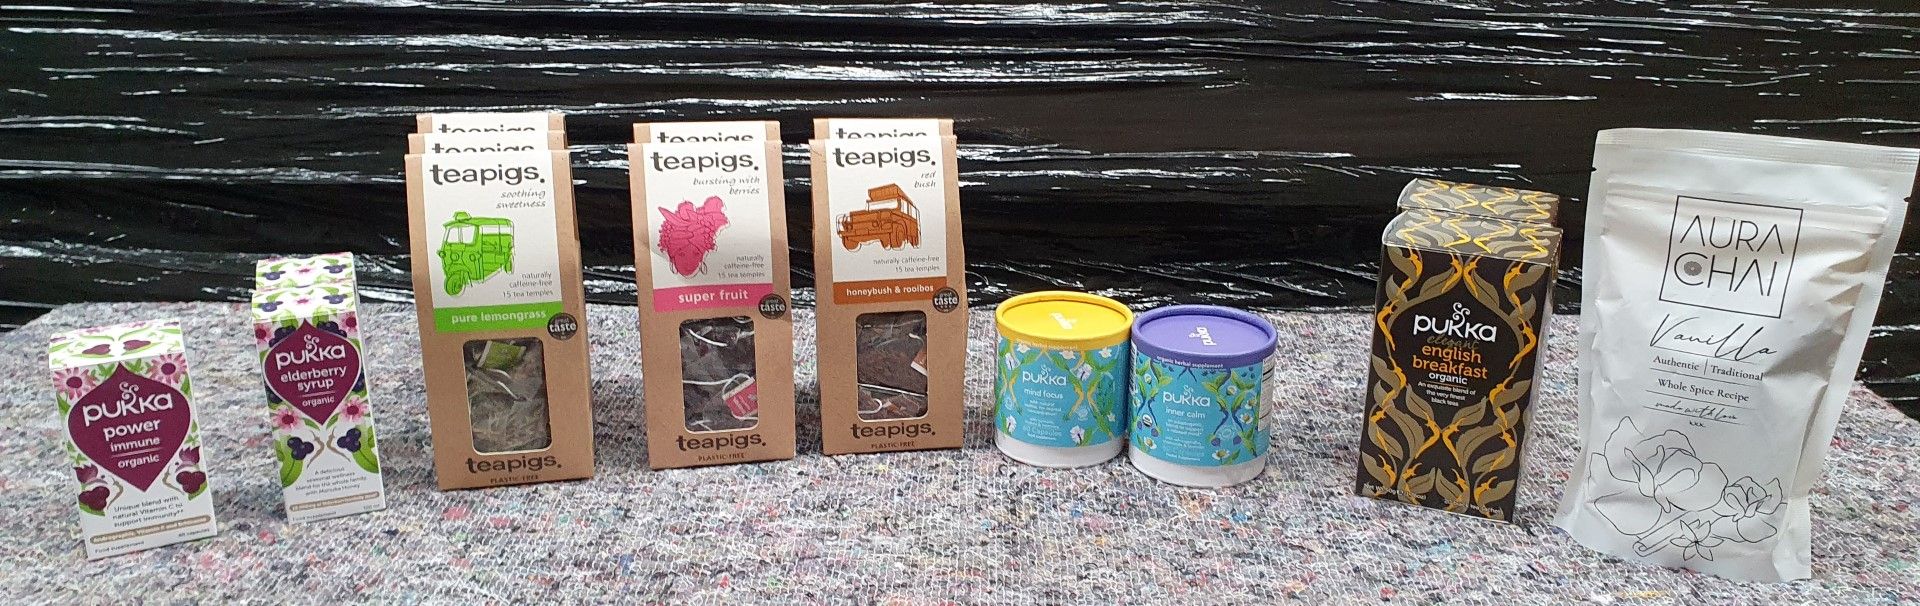 16 x Assorted Tea Products Including Pukka Organic Tea, Teapigs Tea and Aura Chai Tea - New